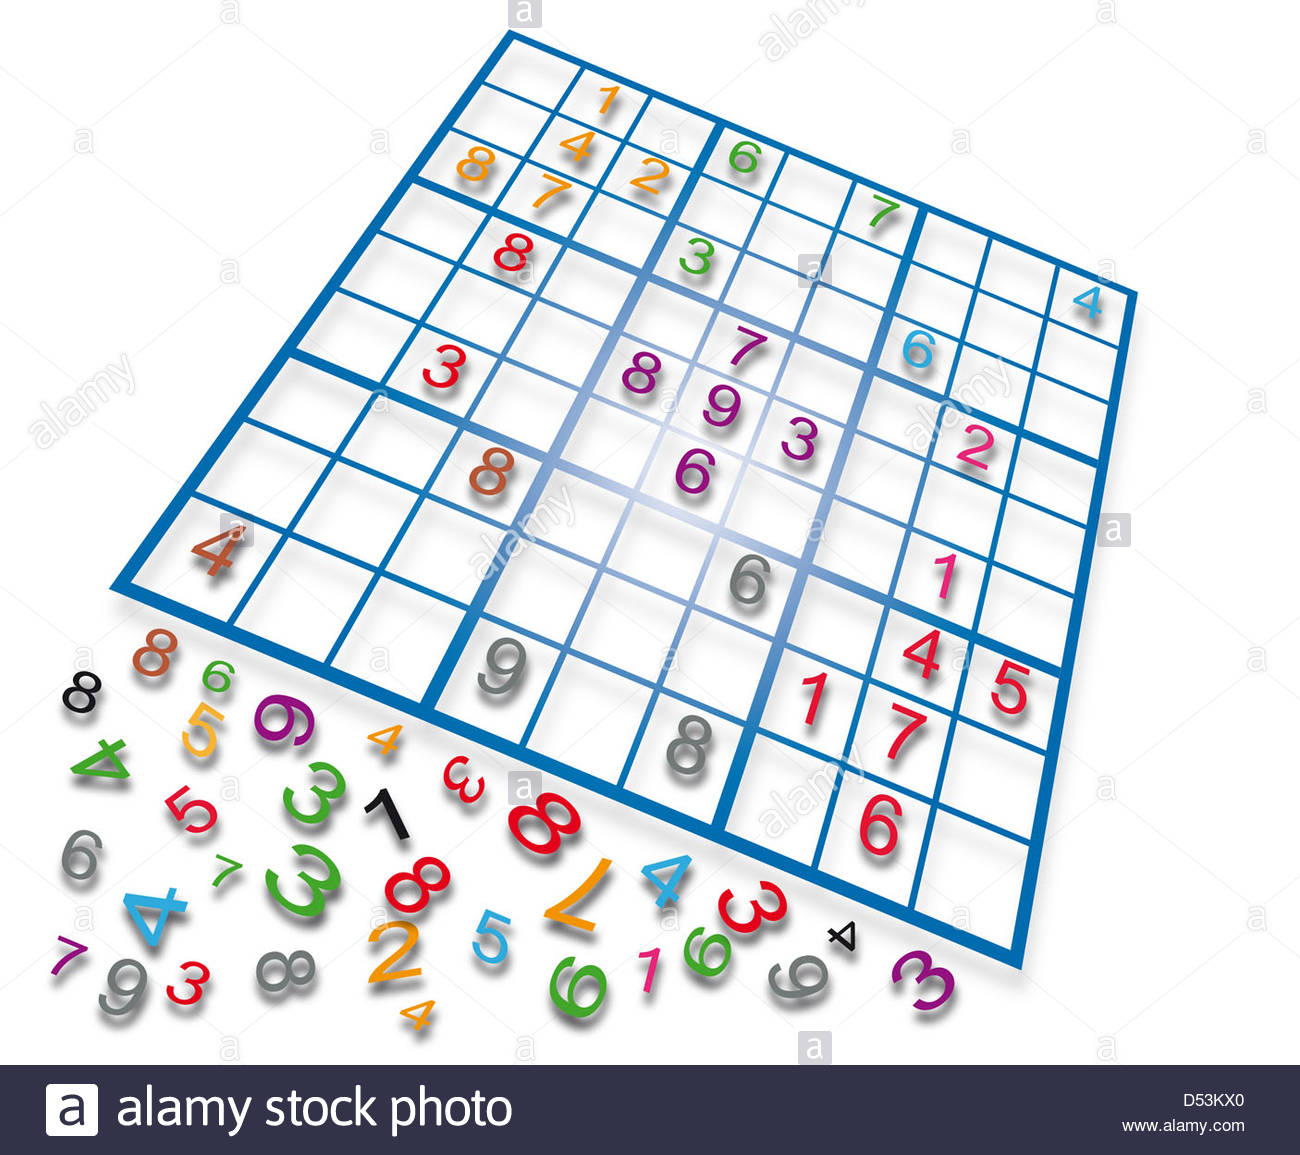 Game Of Sudoku On White Background Stock Photo